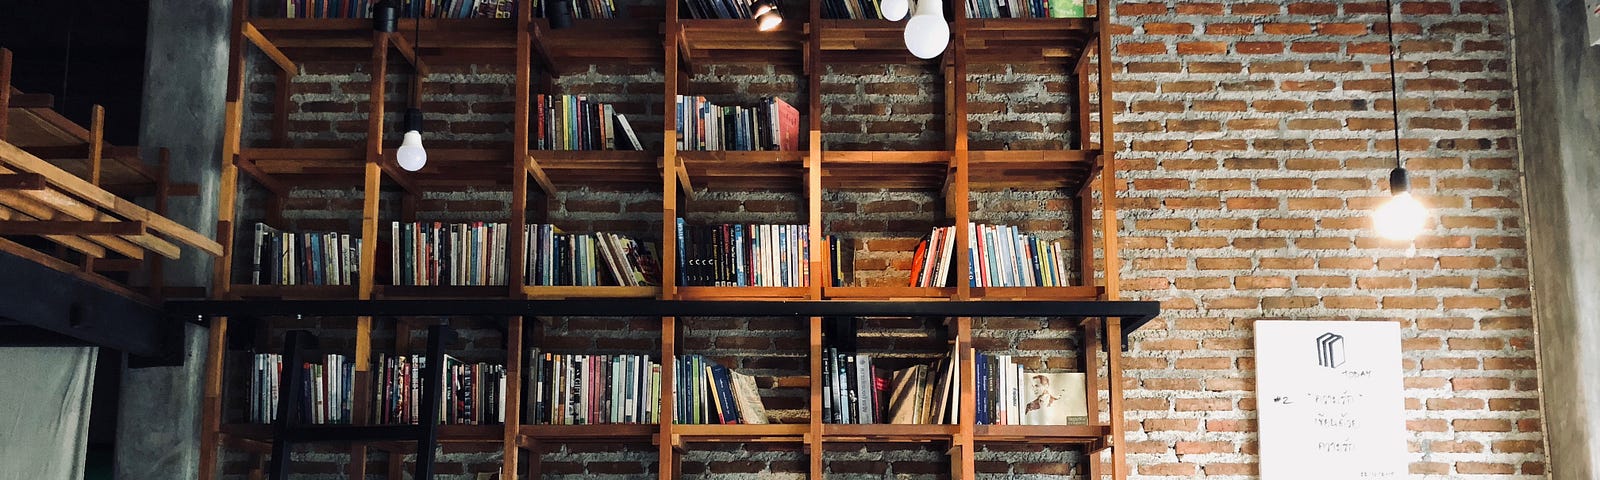 floor to ceiling wood bookshelves against brick wall